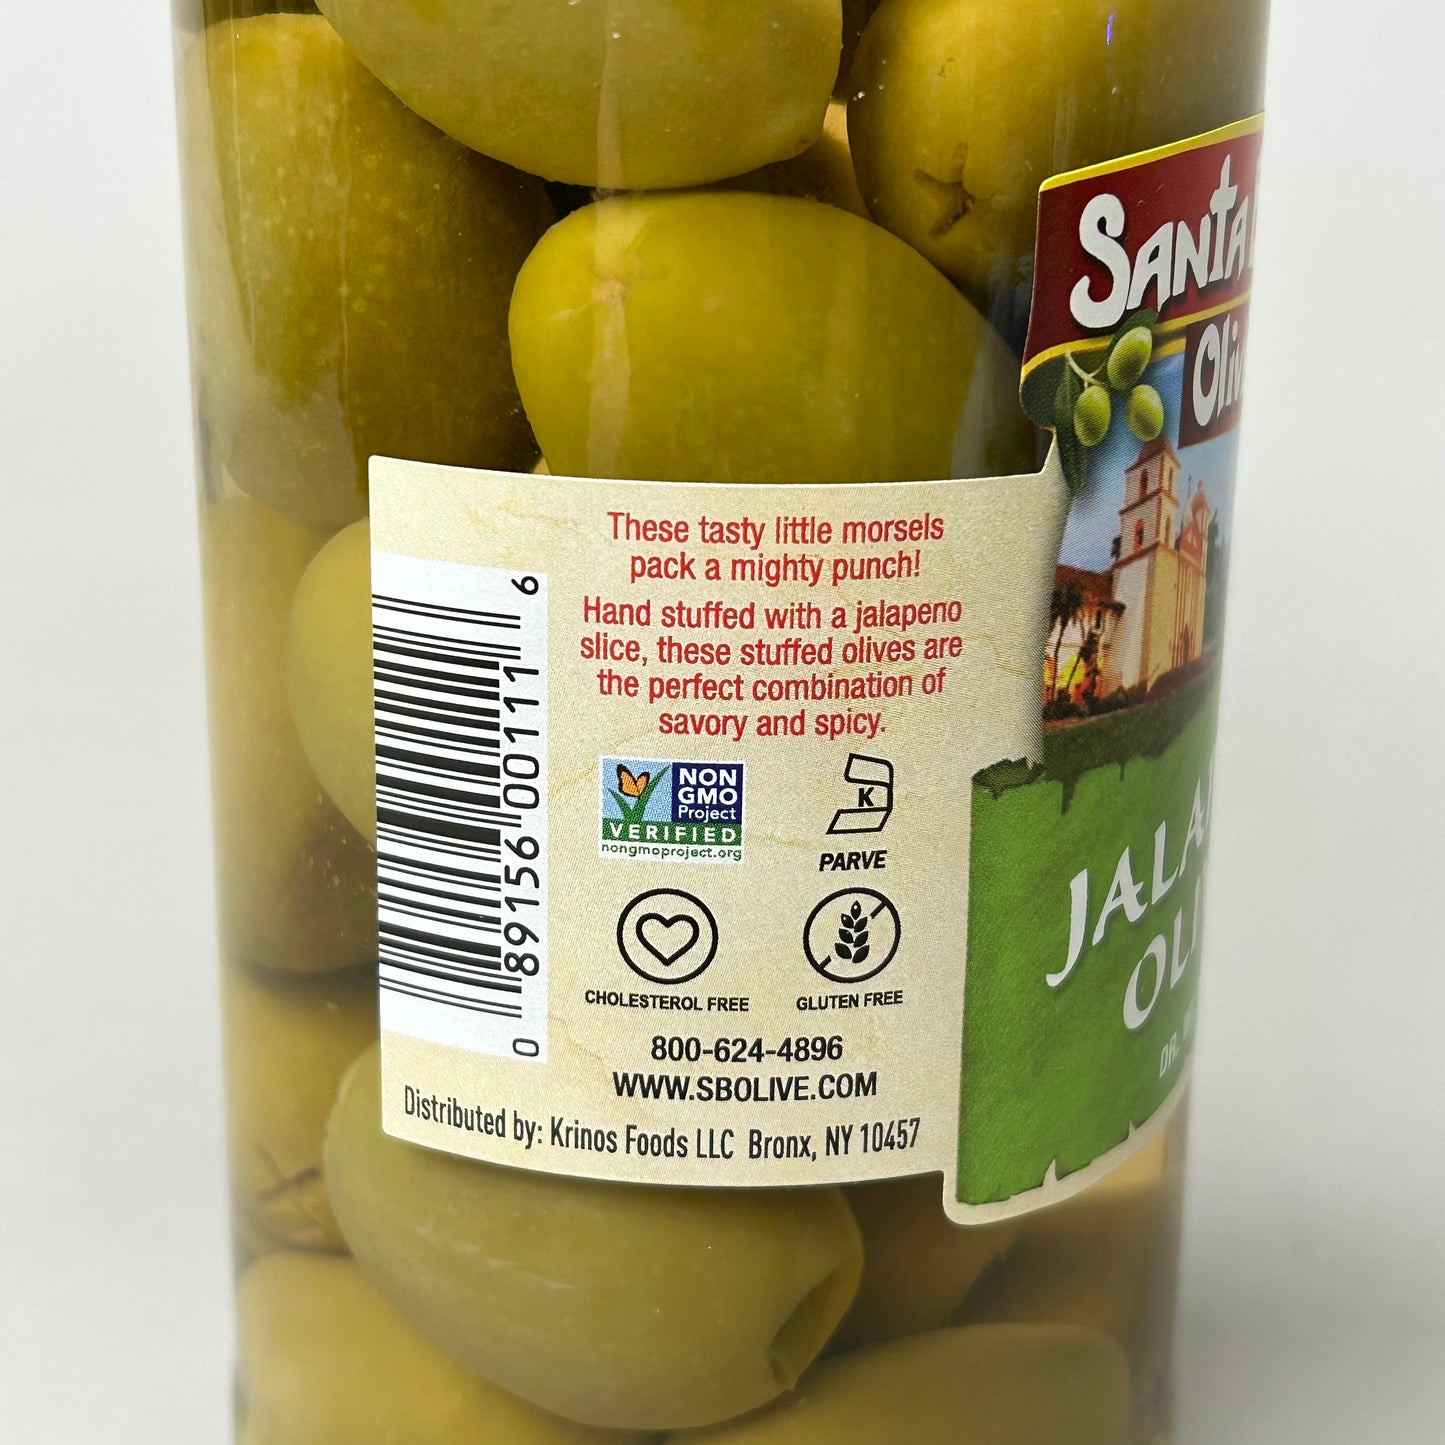 SANTA BARBARA OLIVE CO. 6-PACK! Jalapeño Stuffed Olives 10 oz Jars BB 10/24 (New)